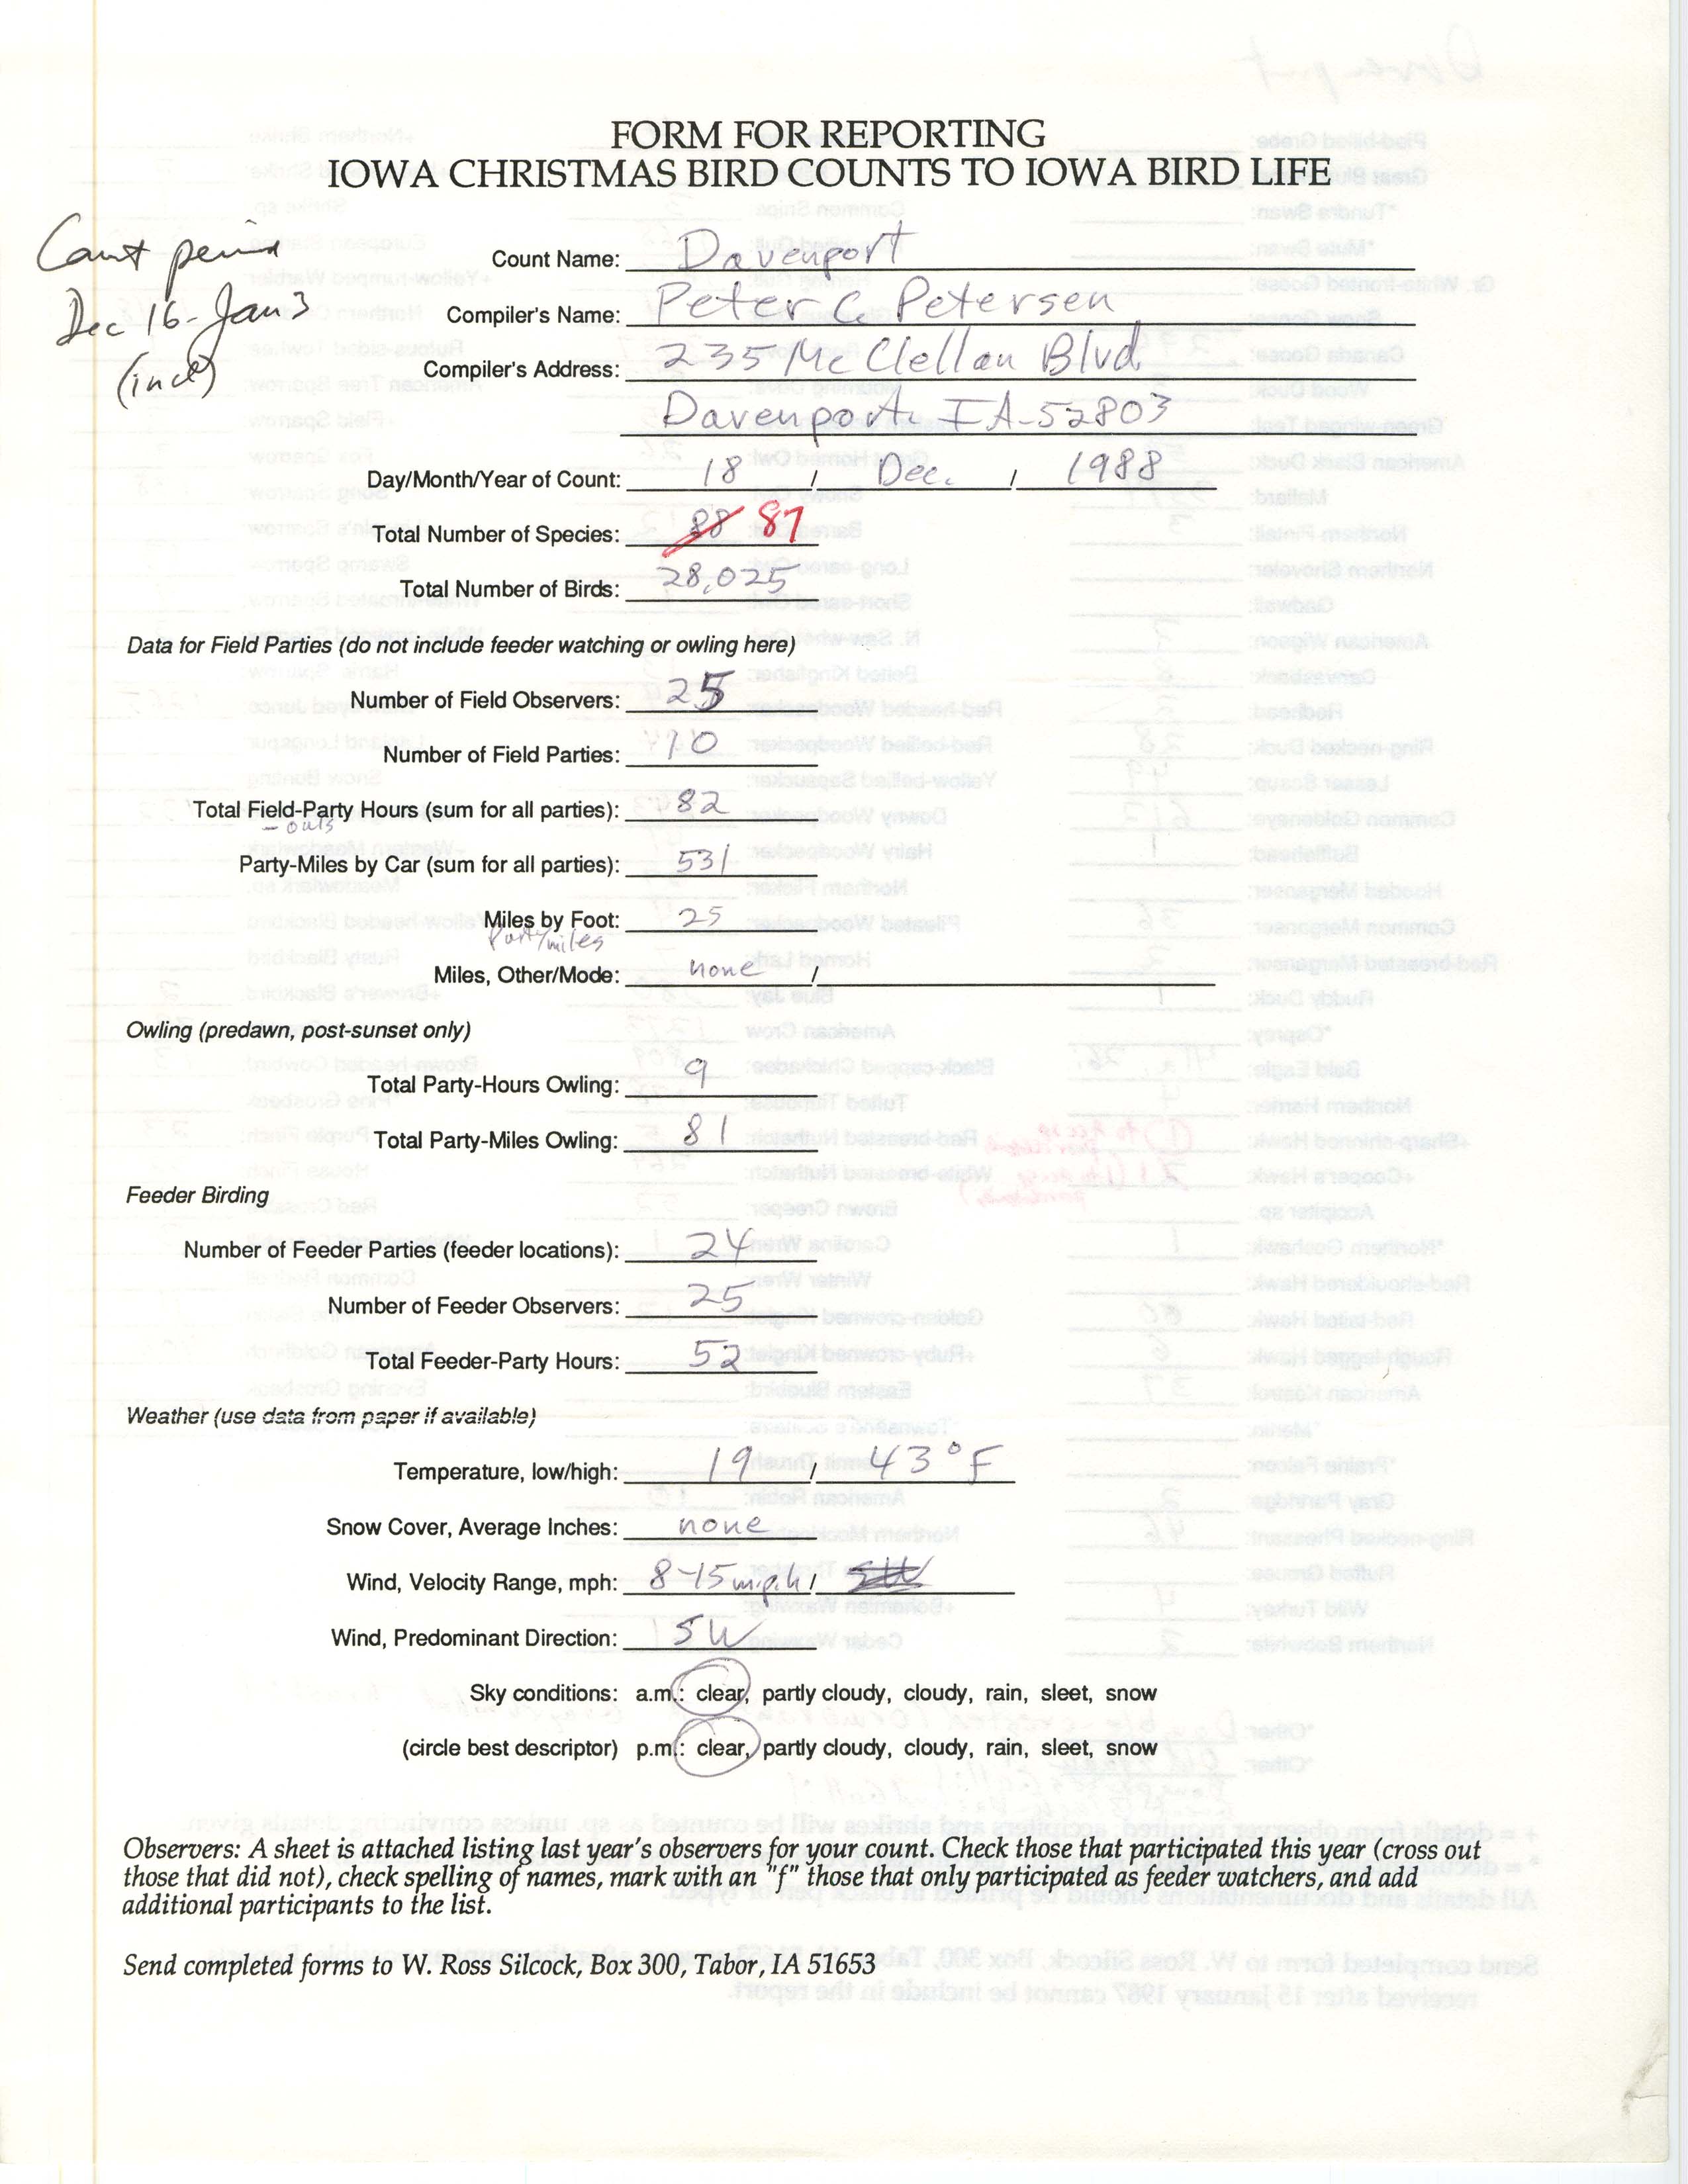 Form for reporting Iowa Christmas bird counts to Iowa Bird Life, Peter C. Petersen, December 18, 1988